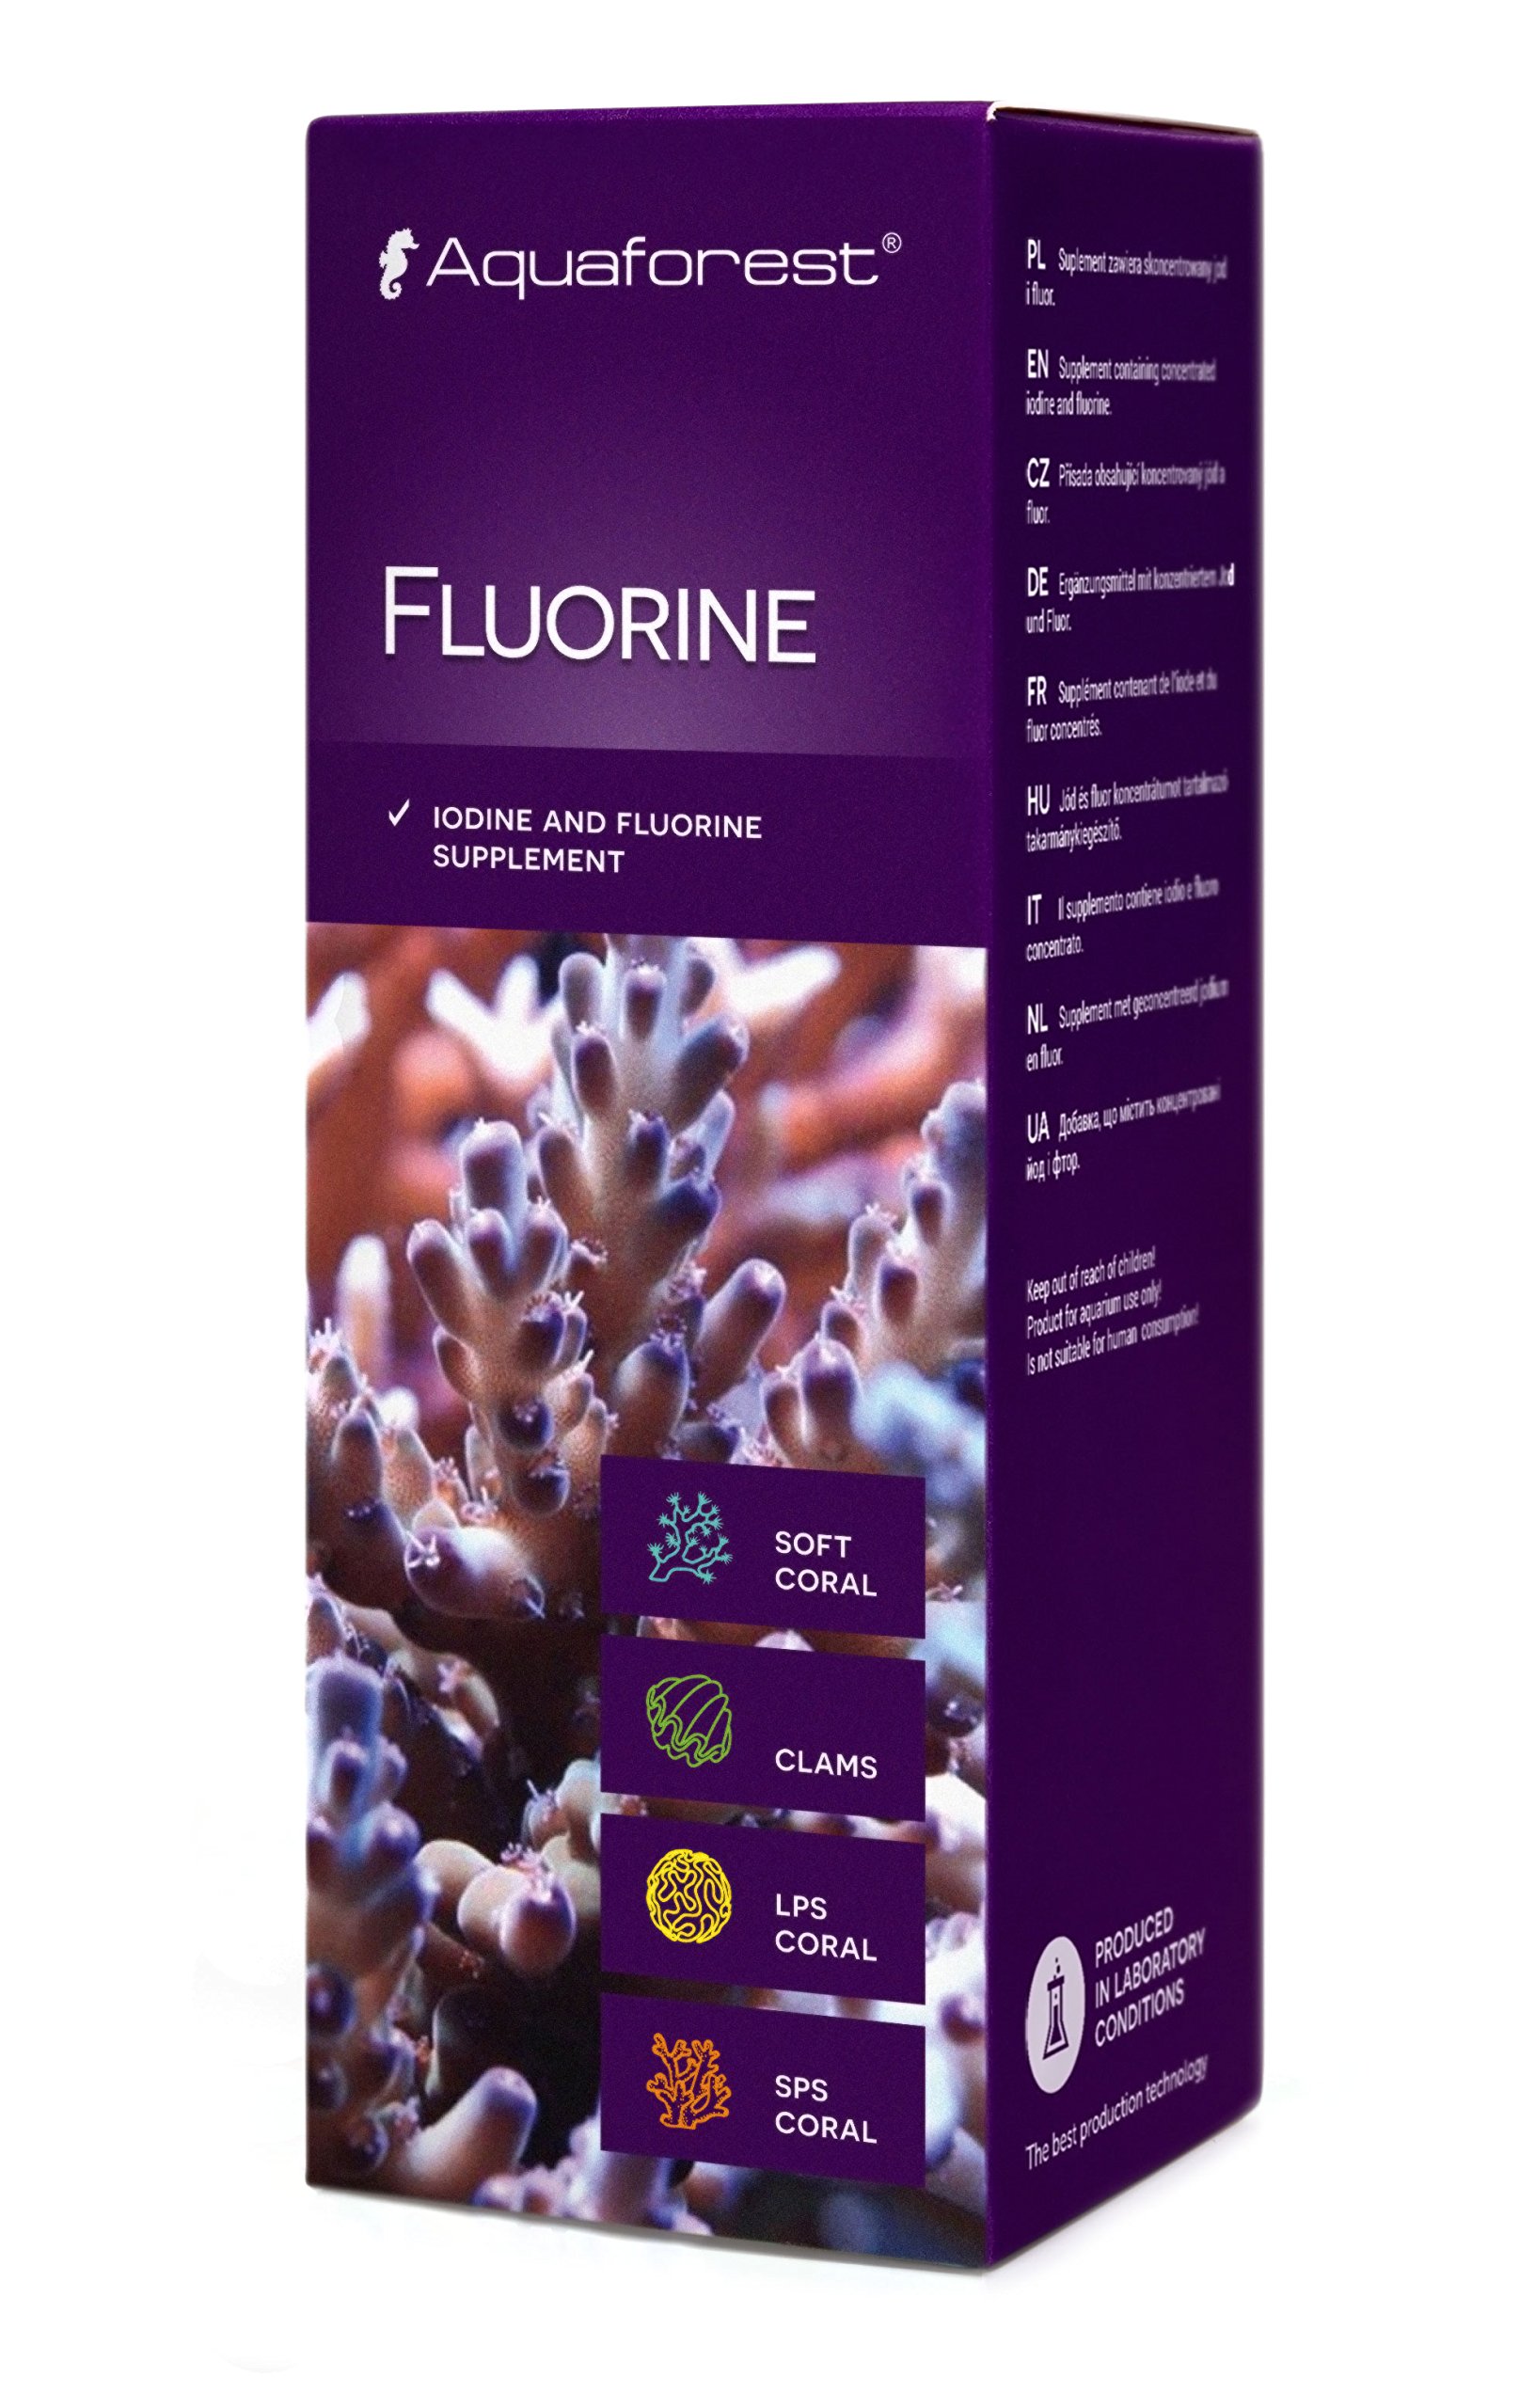 Aquaforest Fluorine 50ml